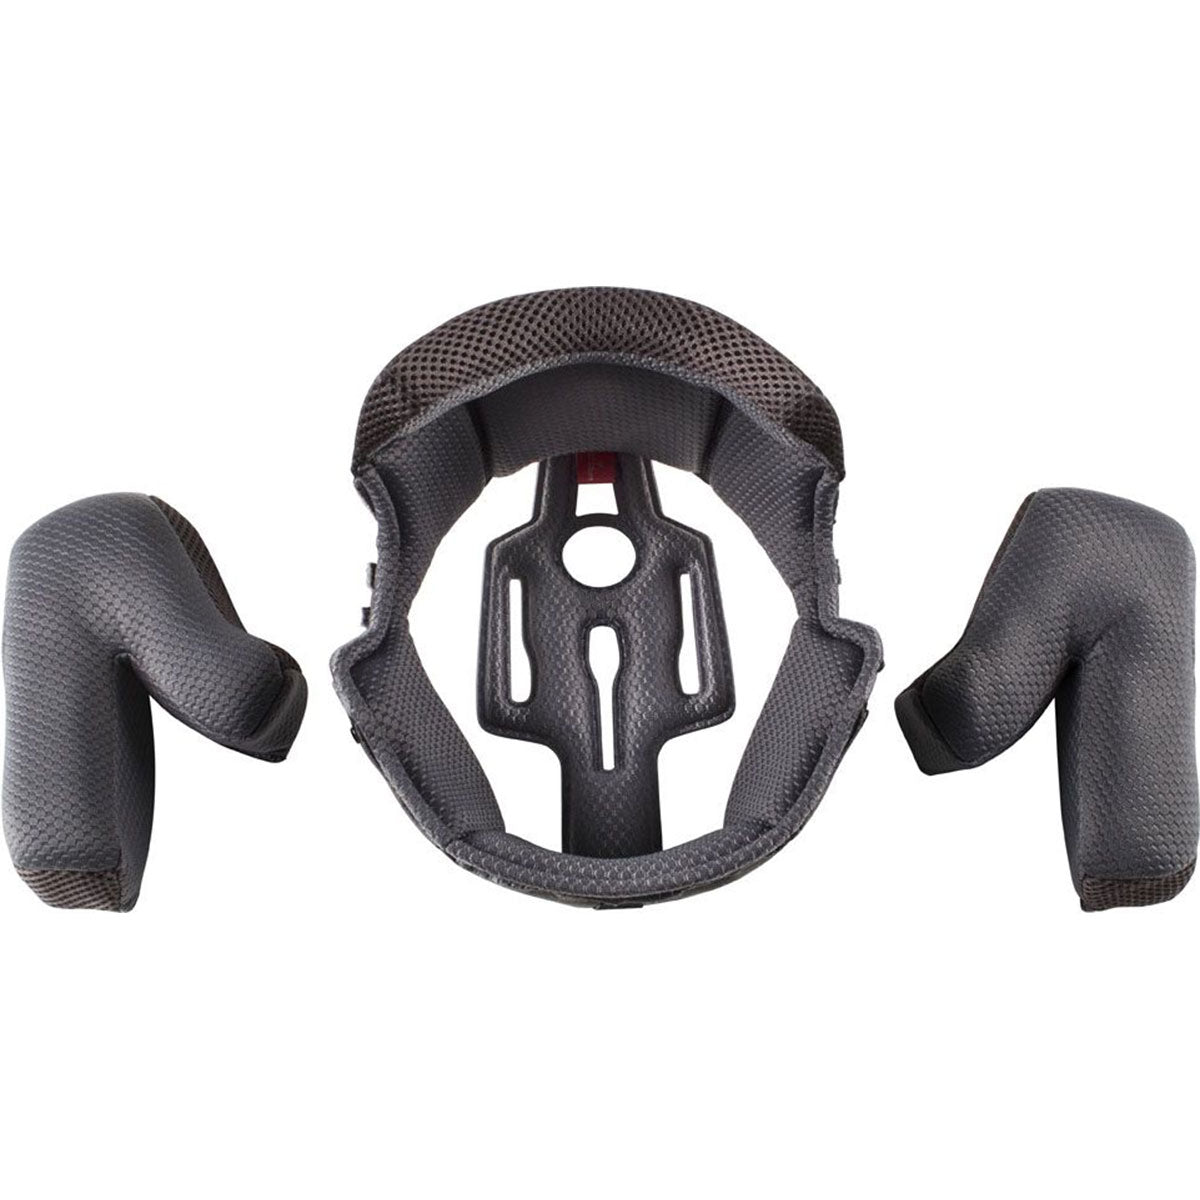 Leatt DBX 5.0/6.0 Inner liner kit Helmet Accessories-4015300110